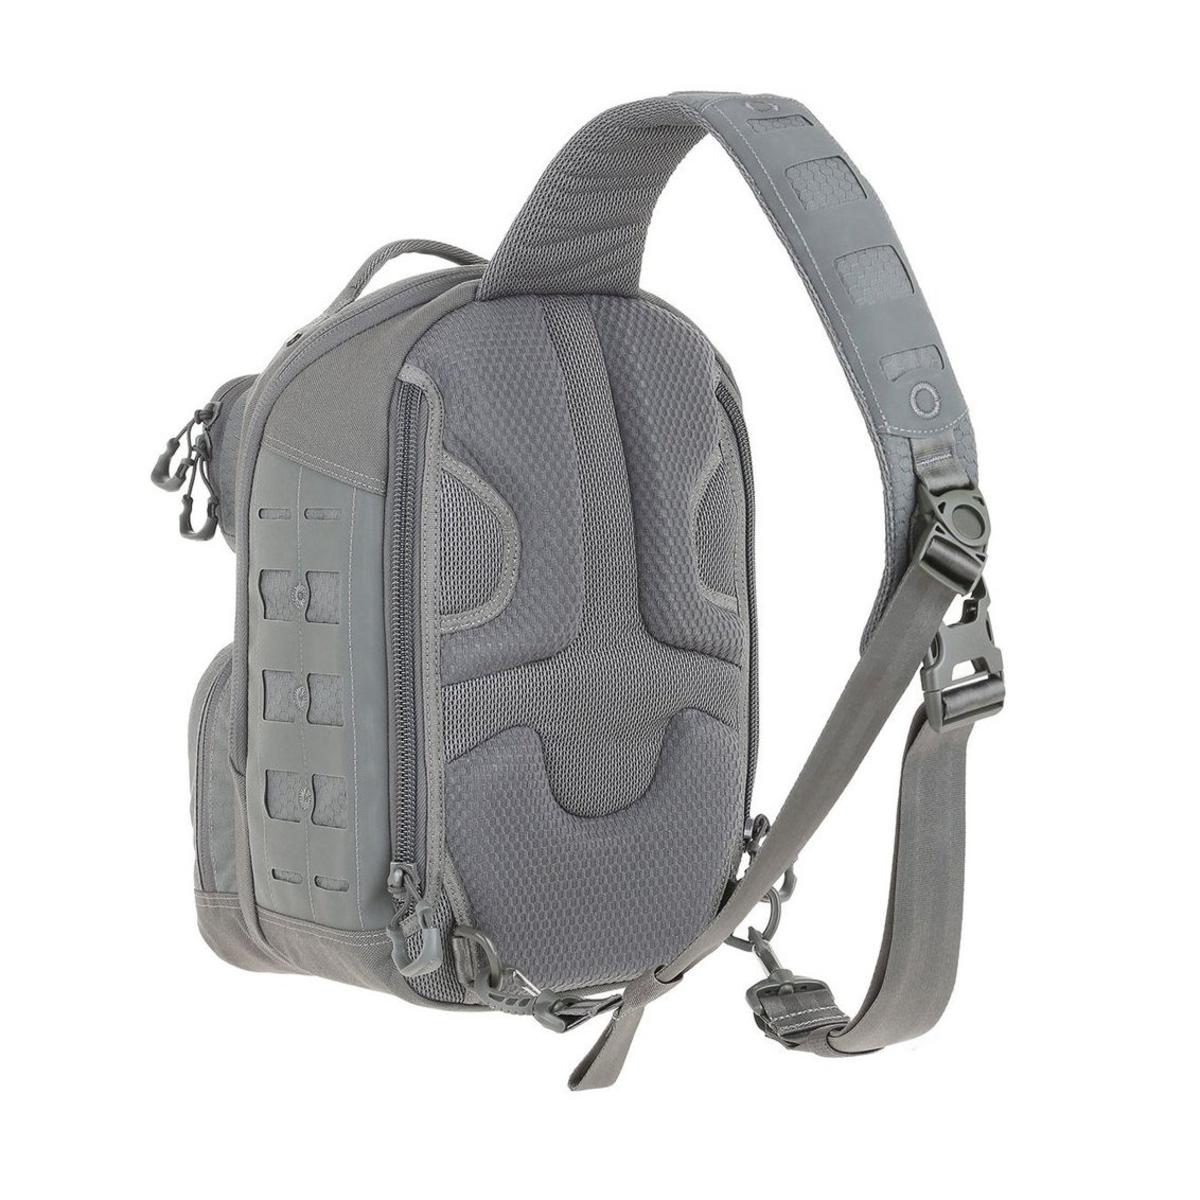 Maxpedition Edgepeak 15L Ambidextrous CCW EDC Sling Pack, Tactical Backpack | eBay